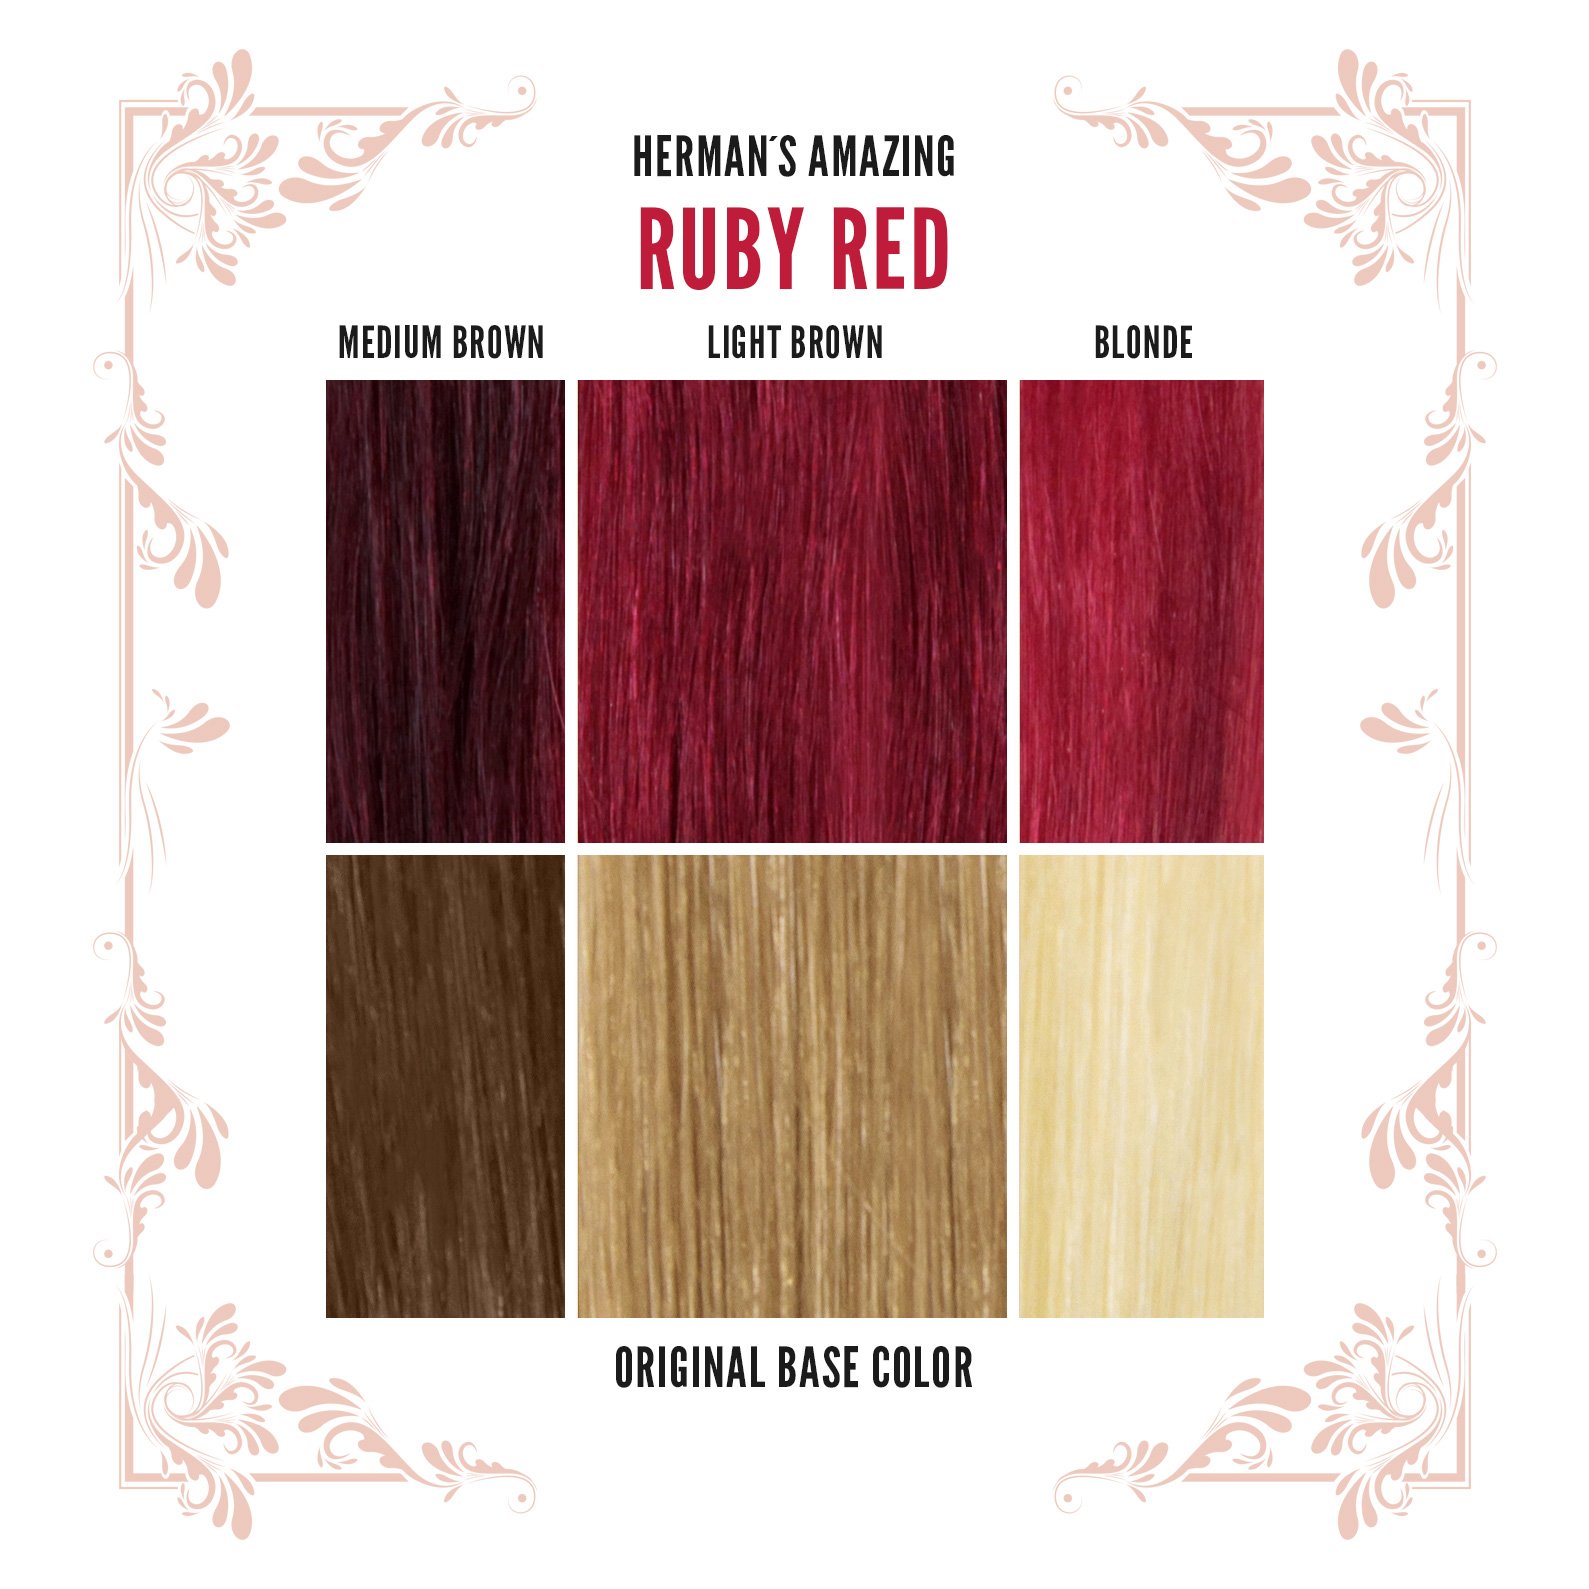 Herman's Amazing - Ruby Red